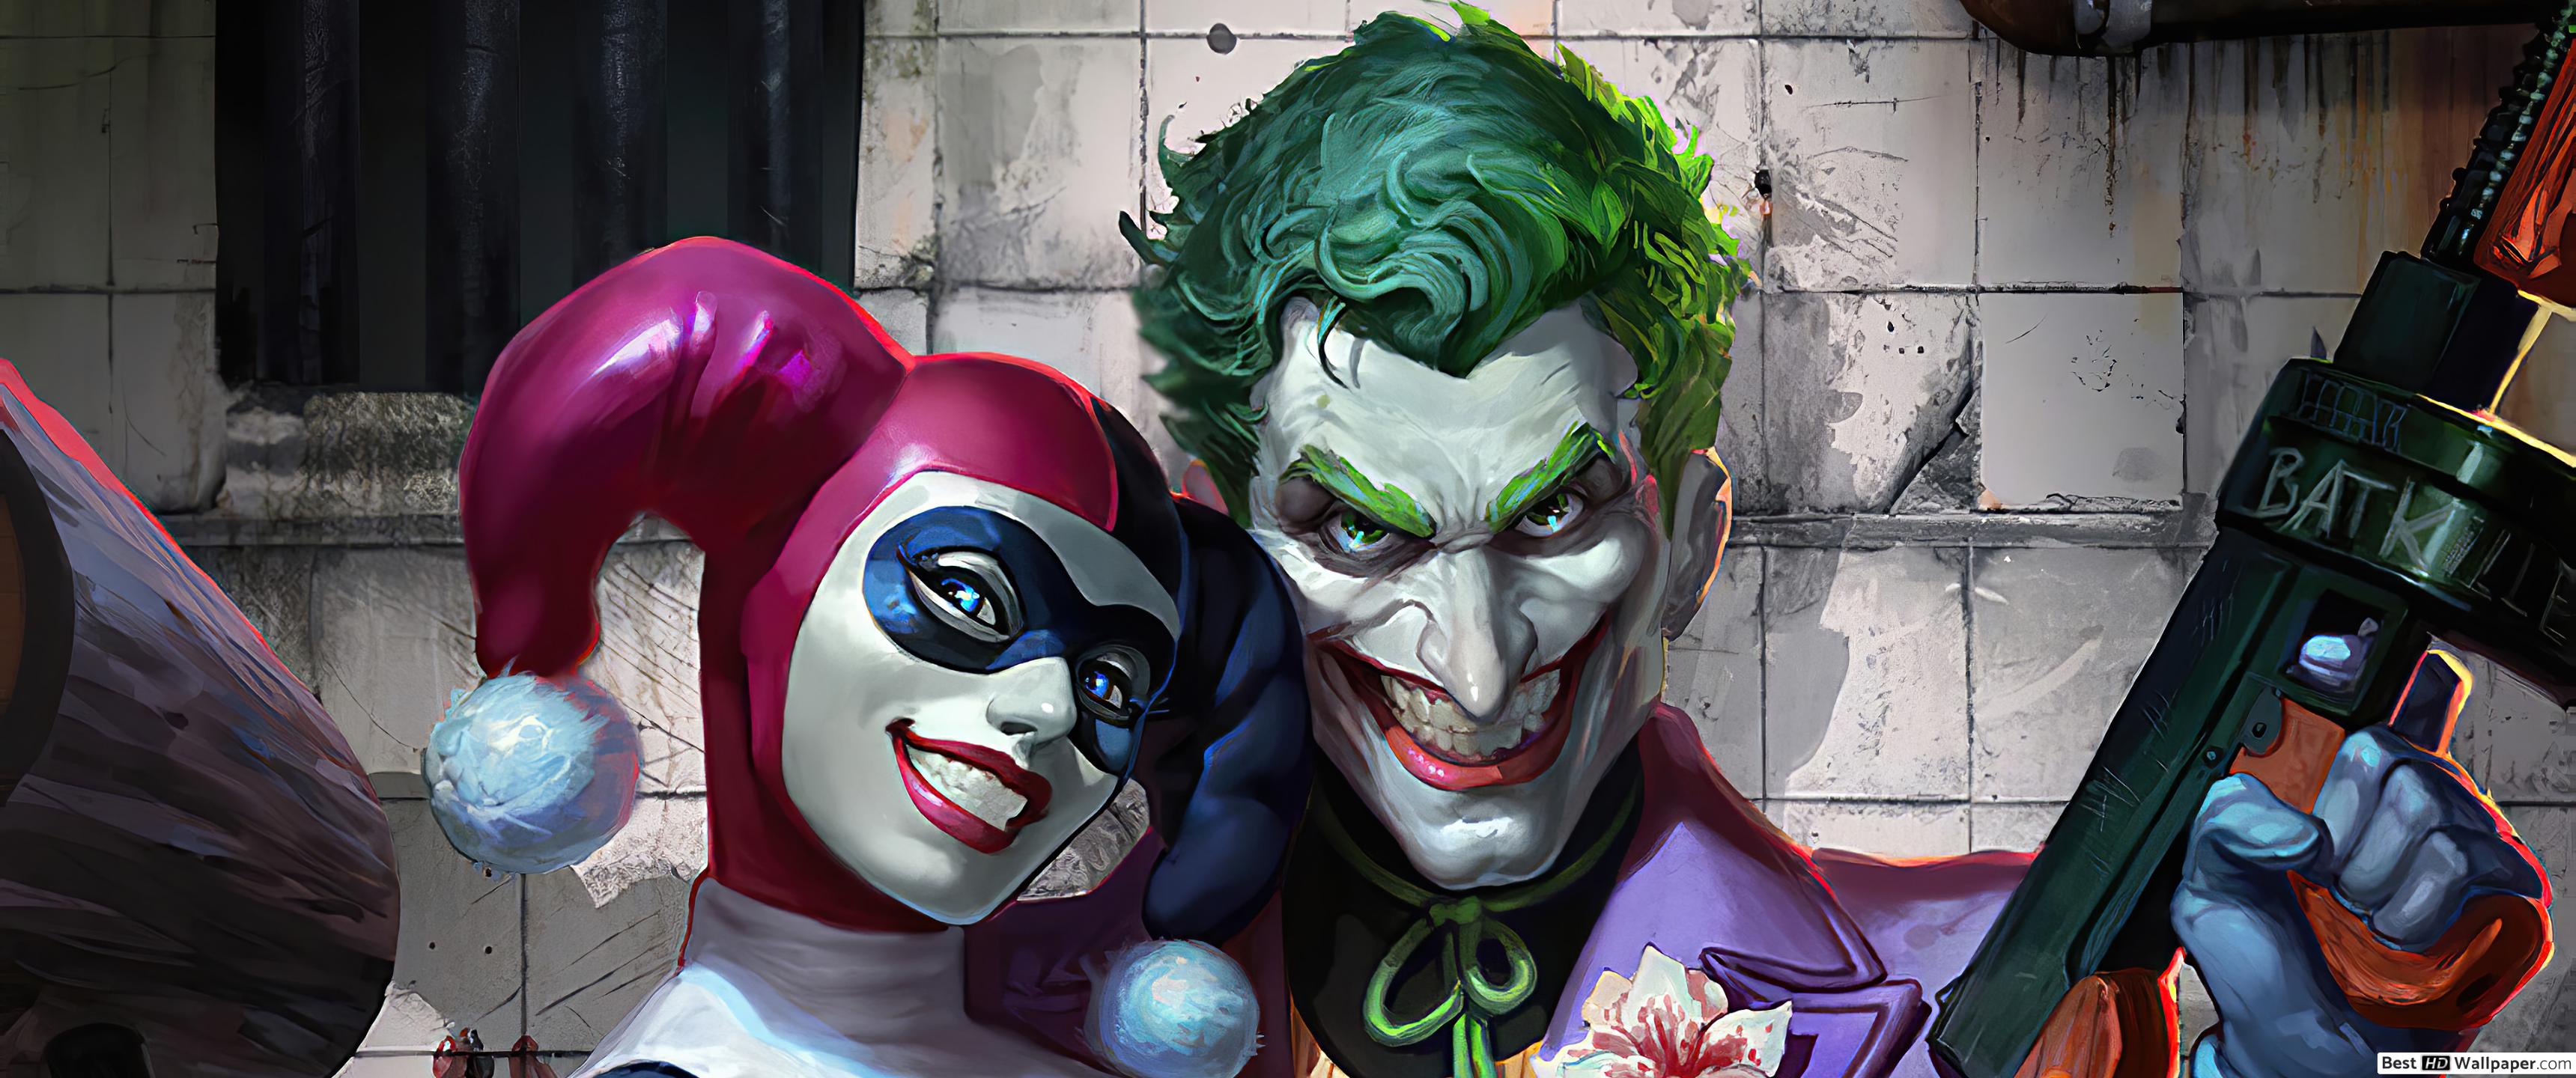 Joker ♥ Harley Quinn HD wallpaper download